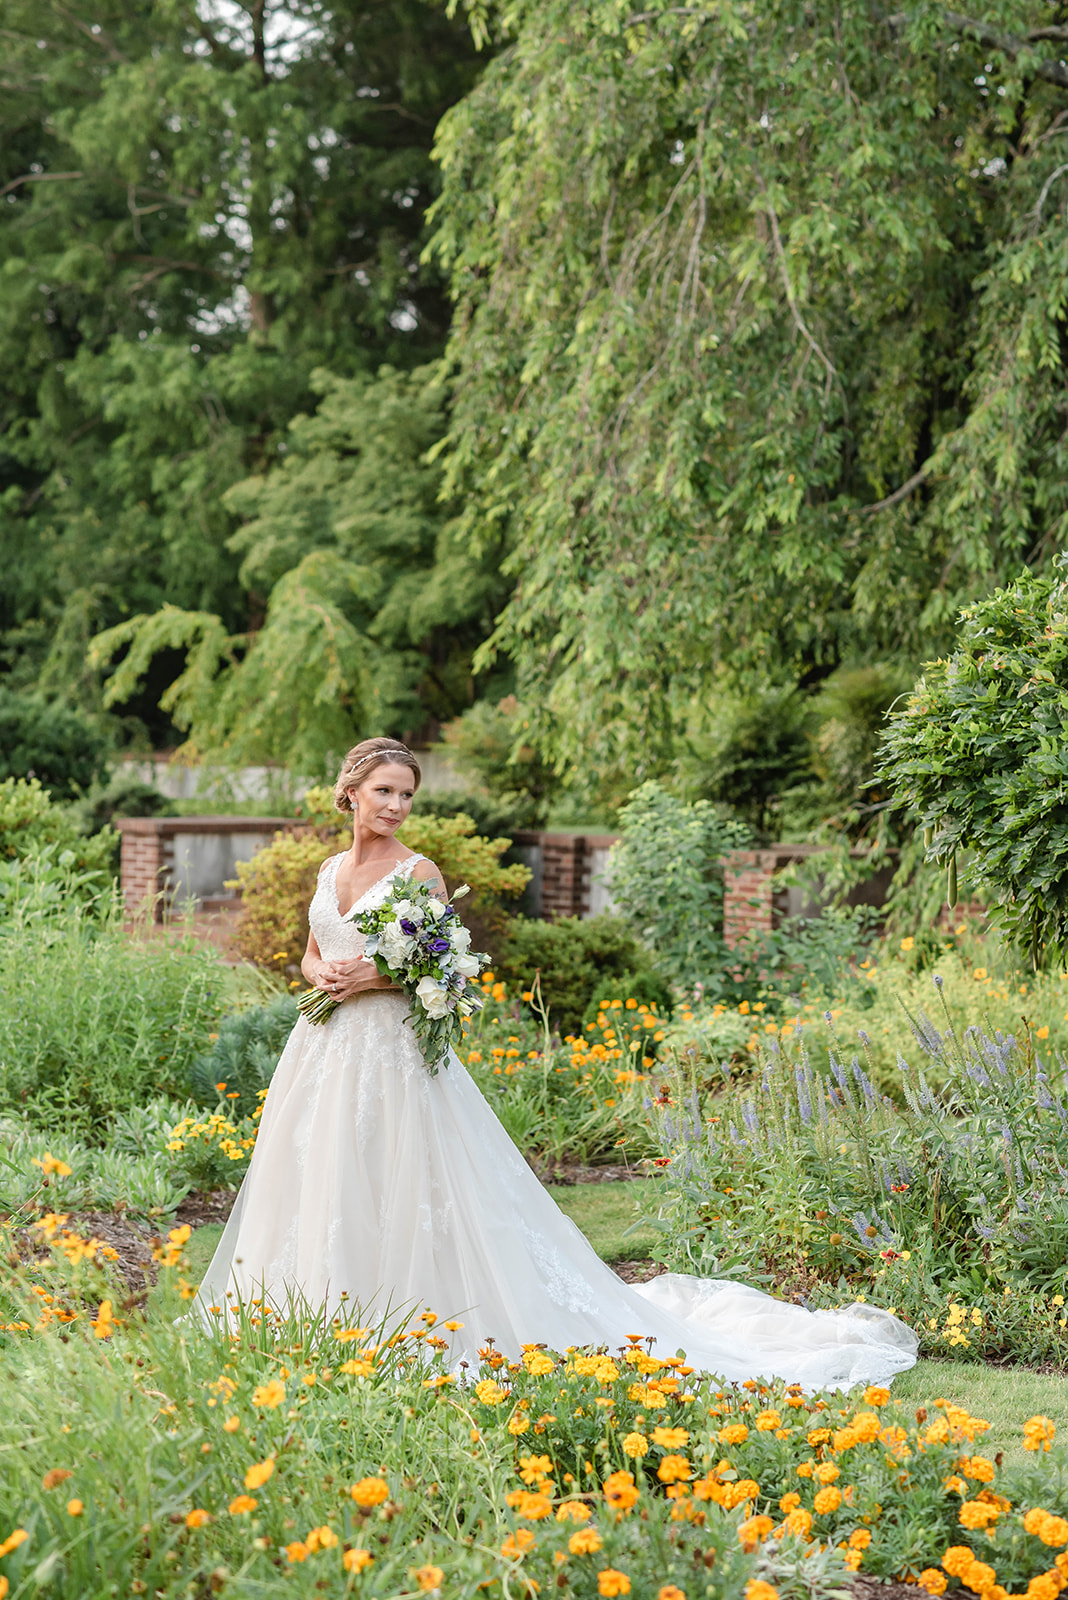 A light-filled evening bridal session at Reynolda Gardens in Winston-Salem, NC. 